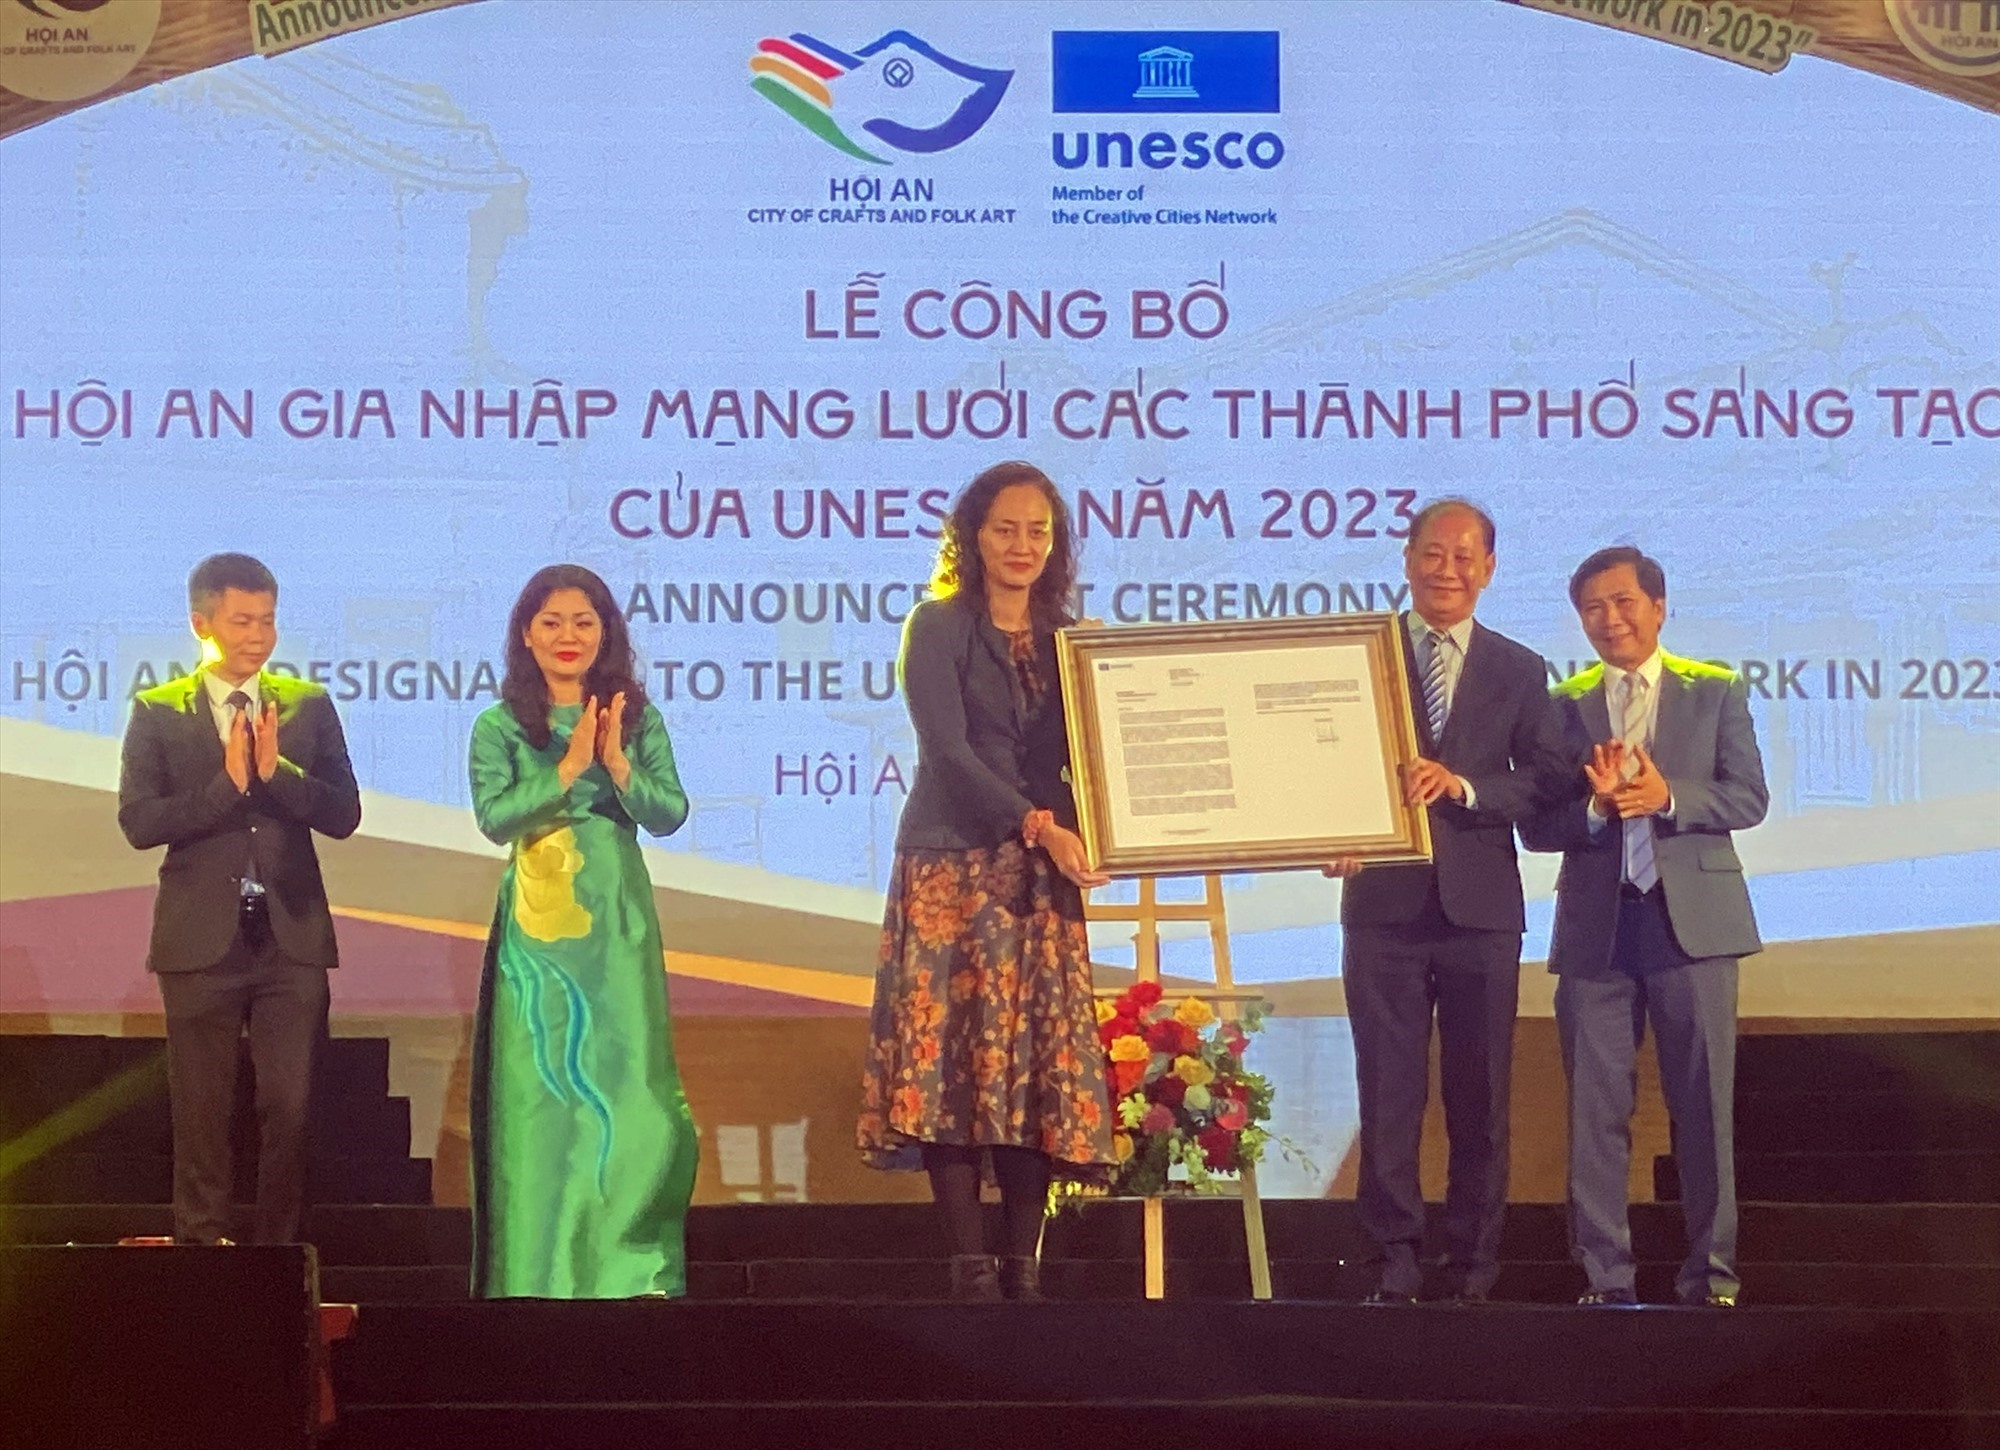 Hoi An officially joins UNESCO Creative Cities Network